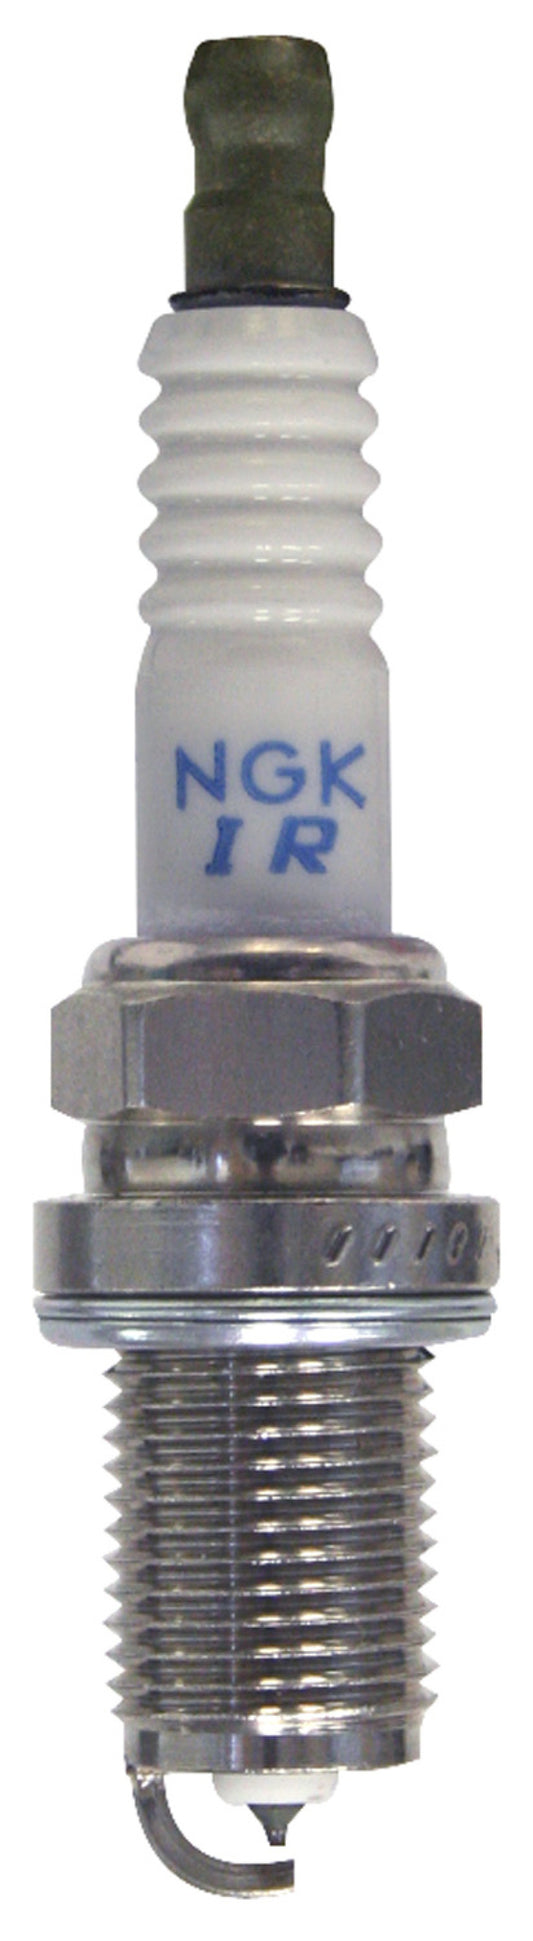 NGK Laser Iridium Spark Plug Box of 4 (IFR7U-4D)